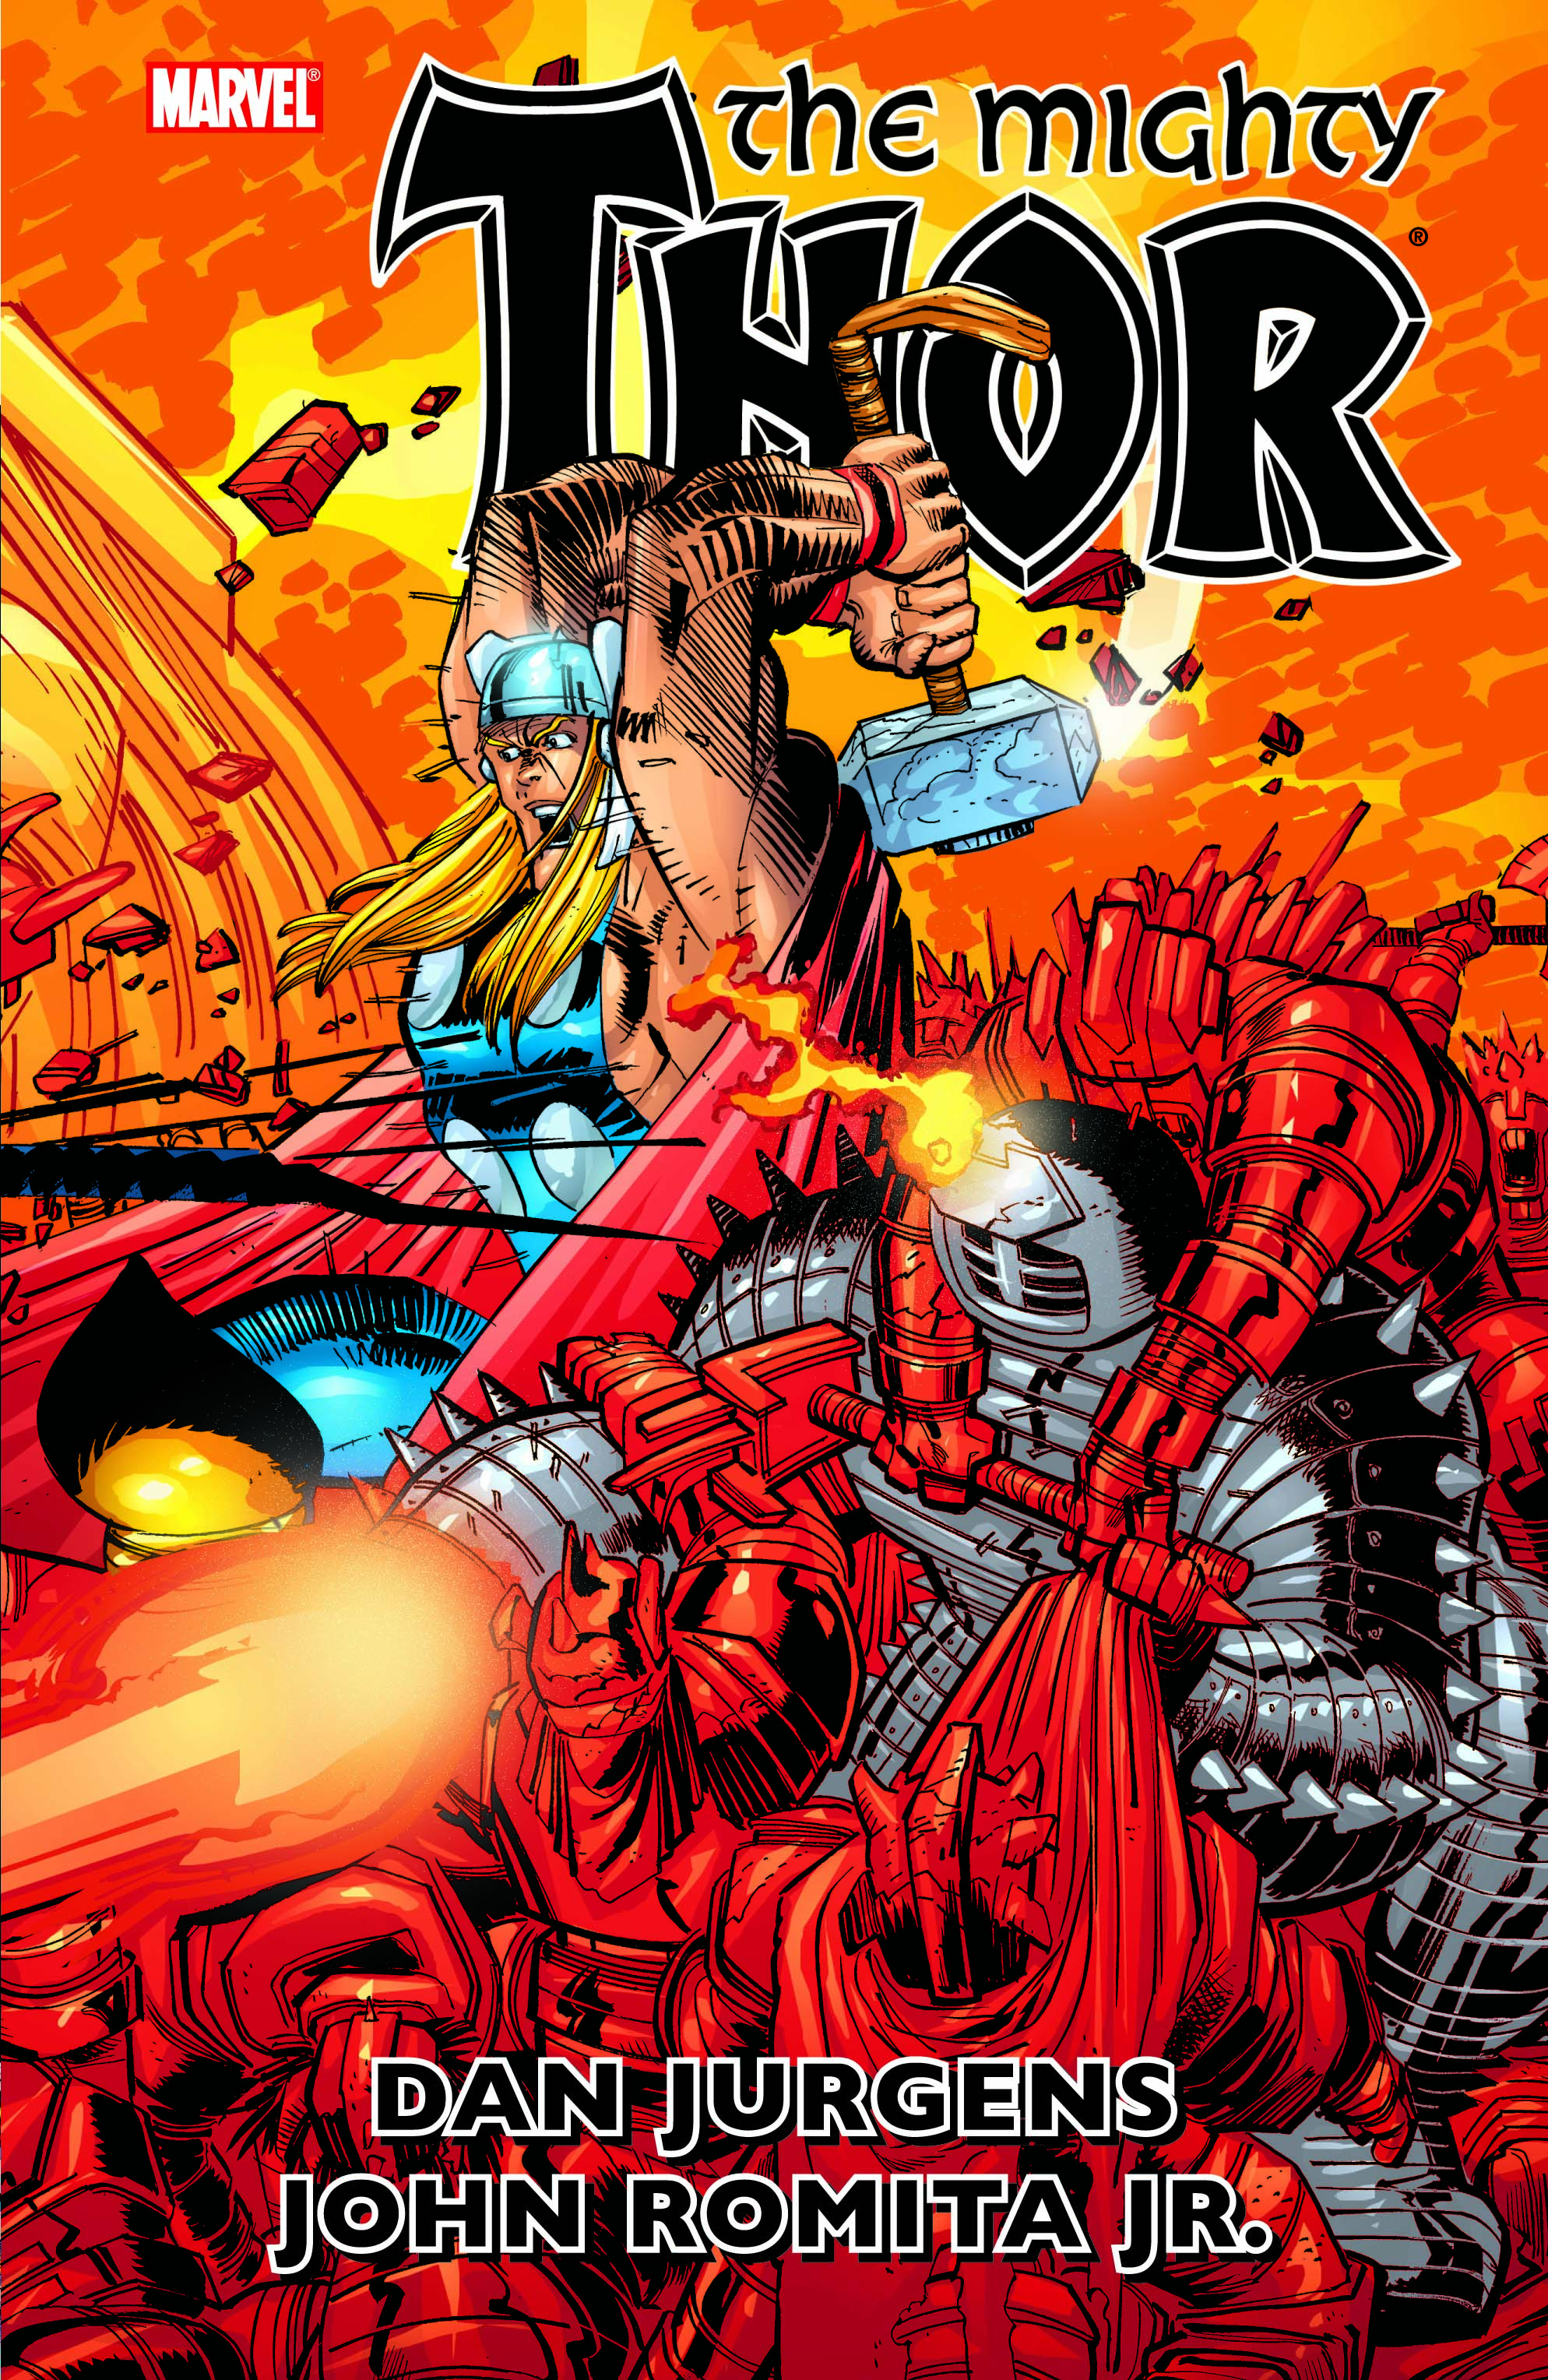 Thor by Dan Jurgens  & John Romita Jr. Vol.2 (Trade Paperback)